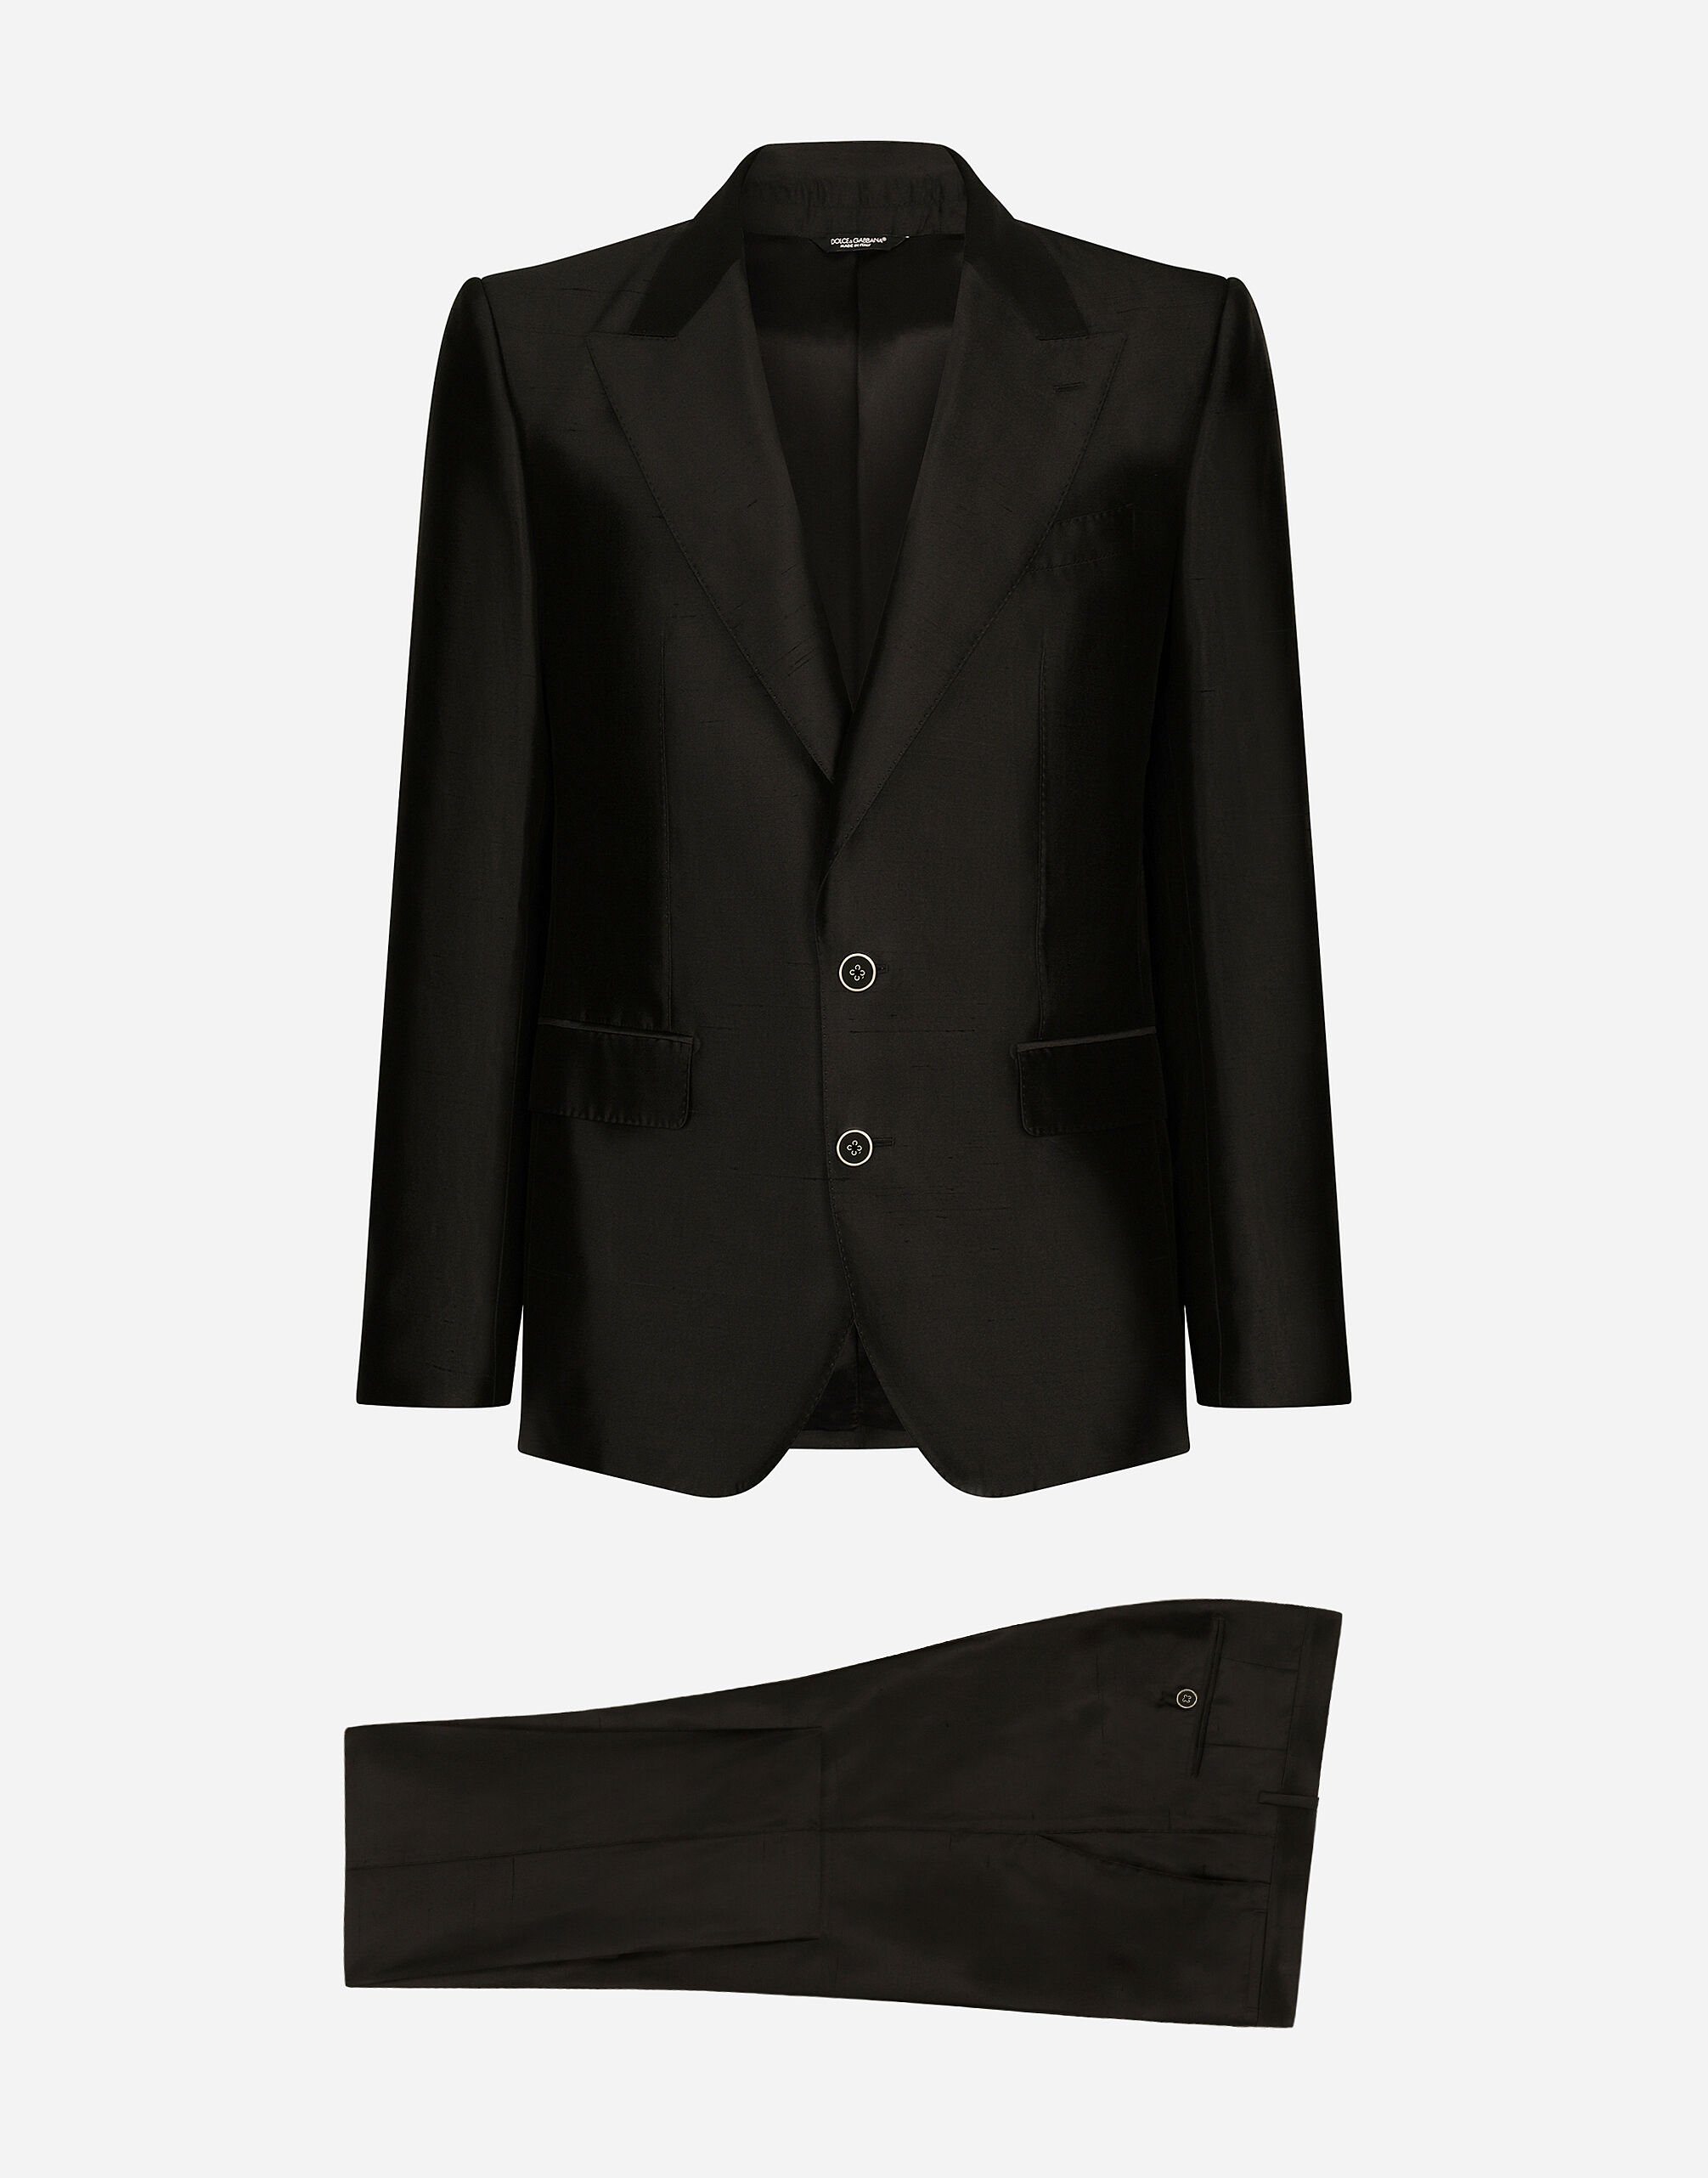 Dolce & Gabbana シングルブレストスーツ シチリアフィット シルクシャンタン ブラック GK0RMTGG059